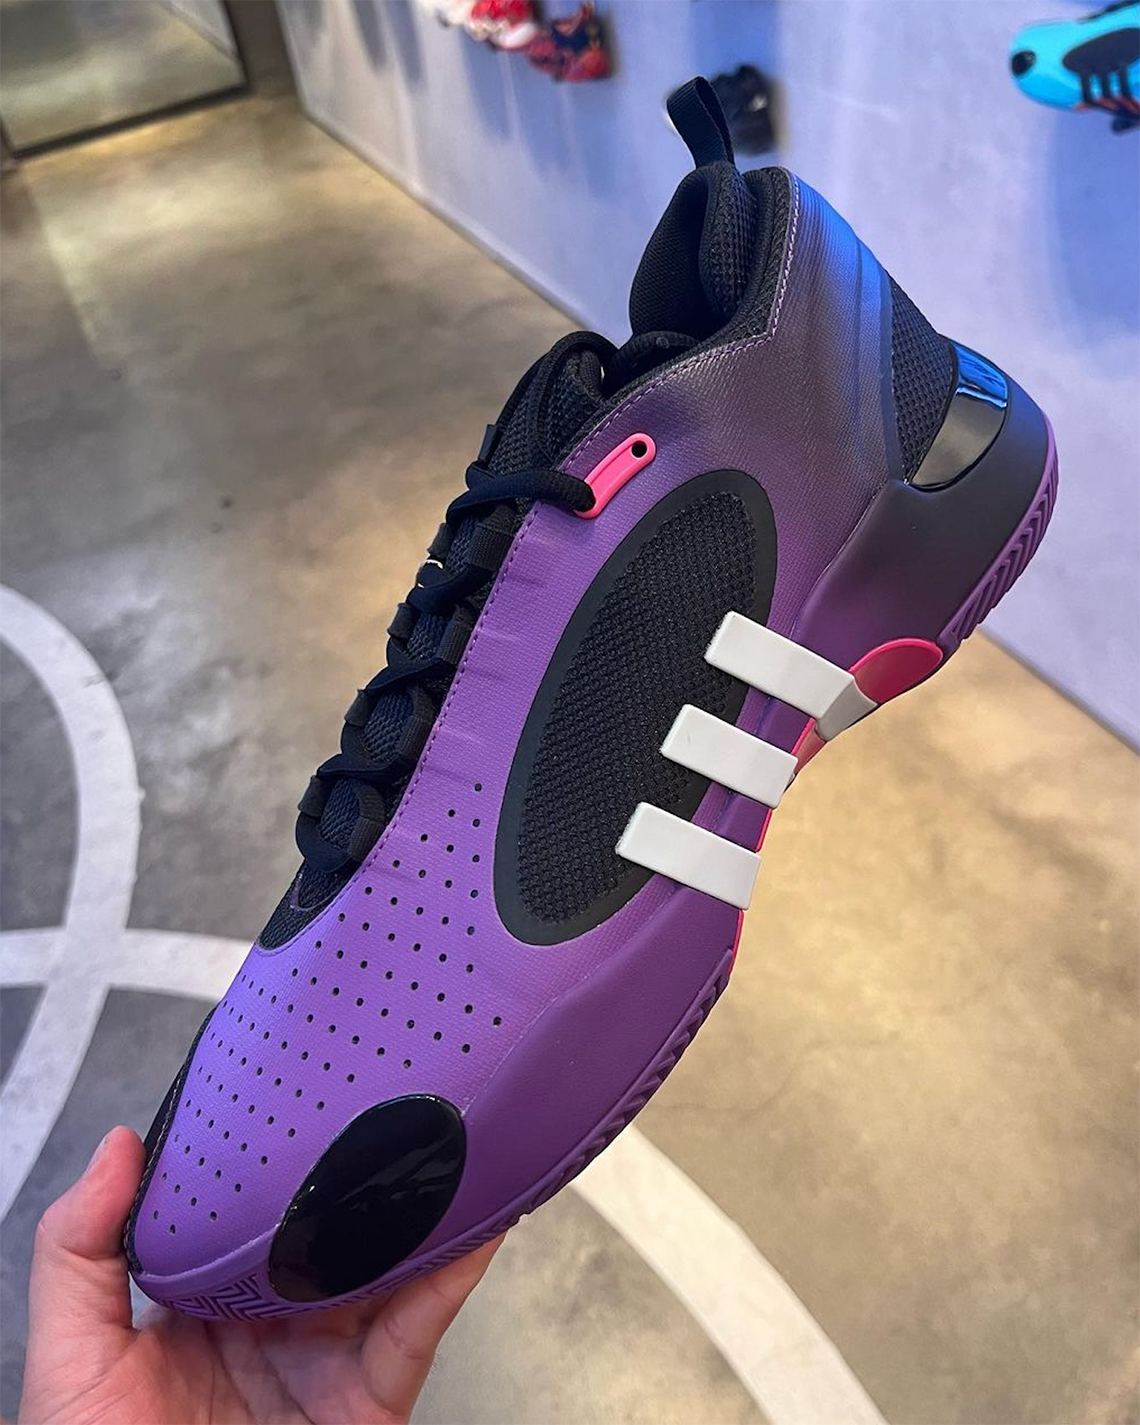 adidas don issue 5 purple black pink 15